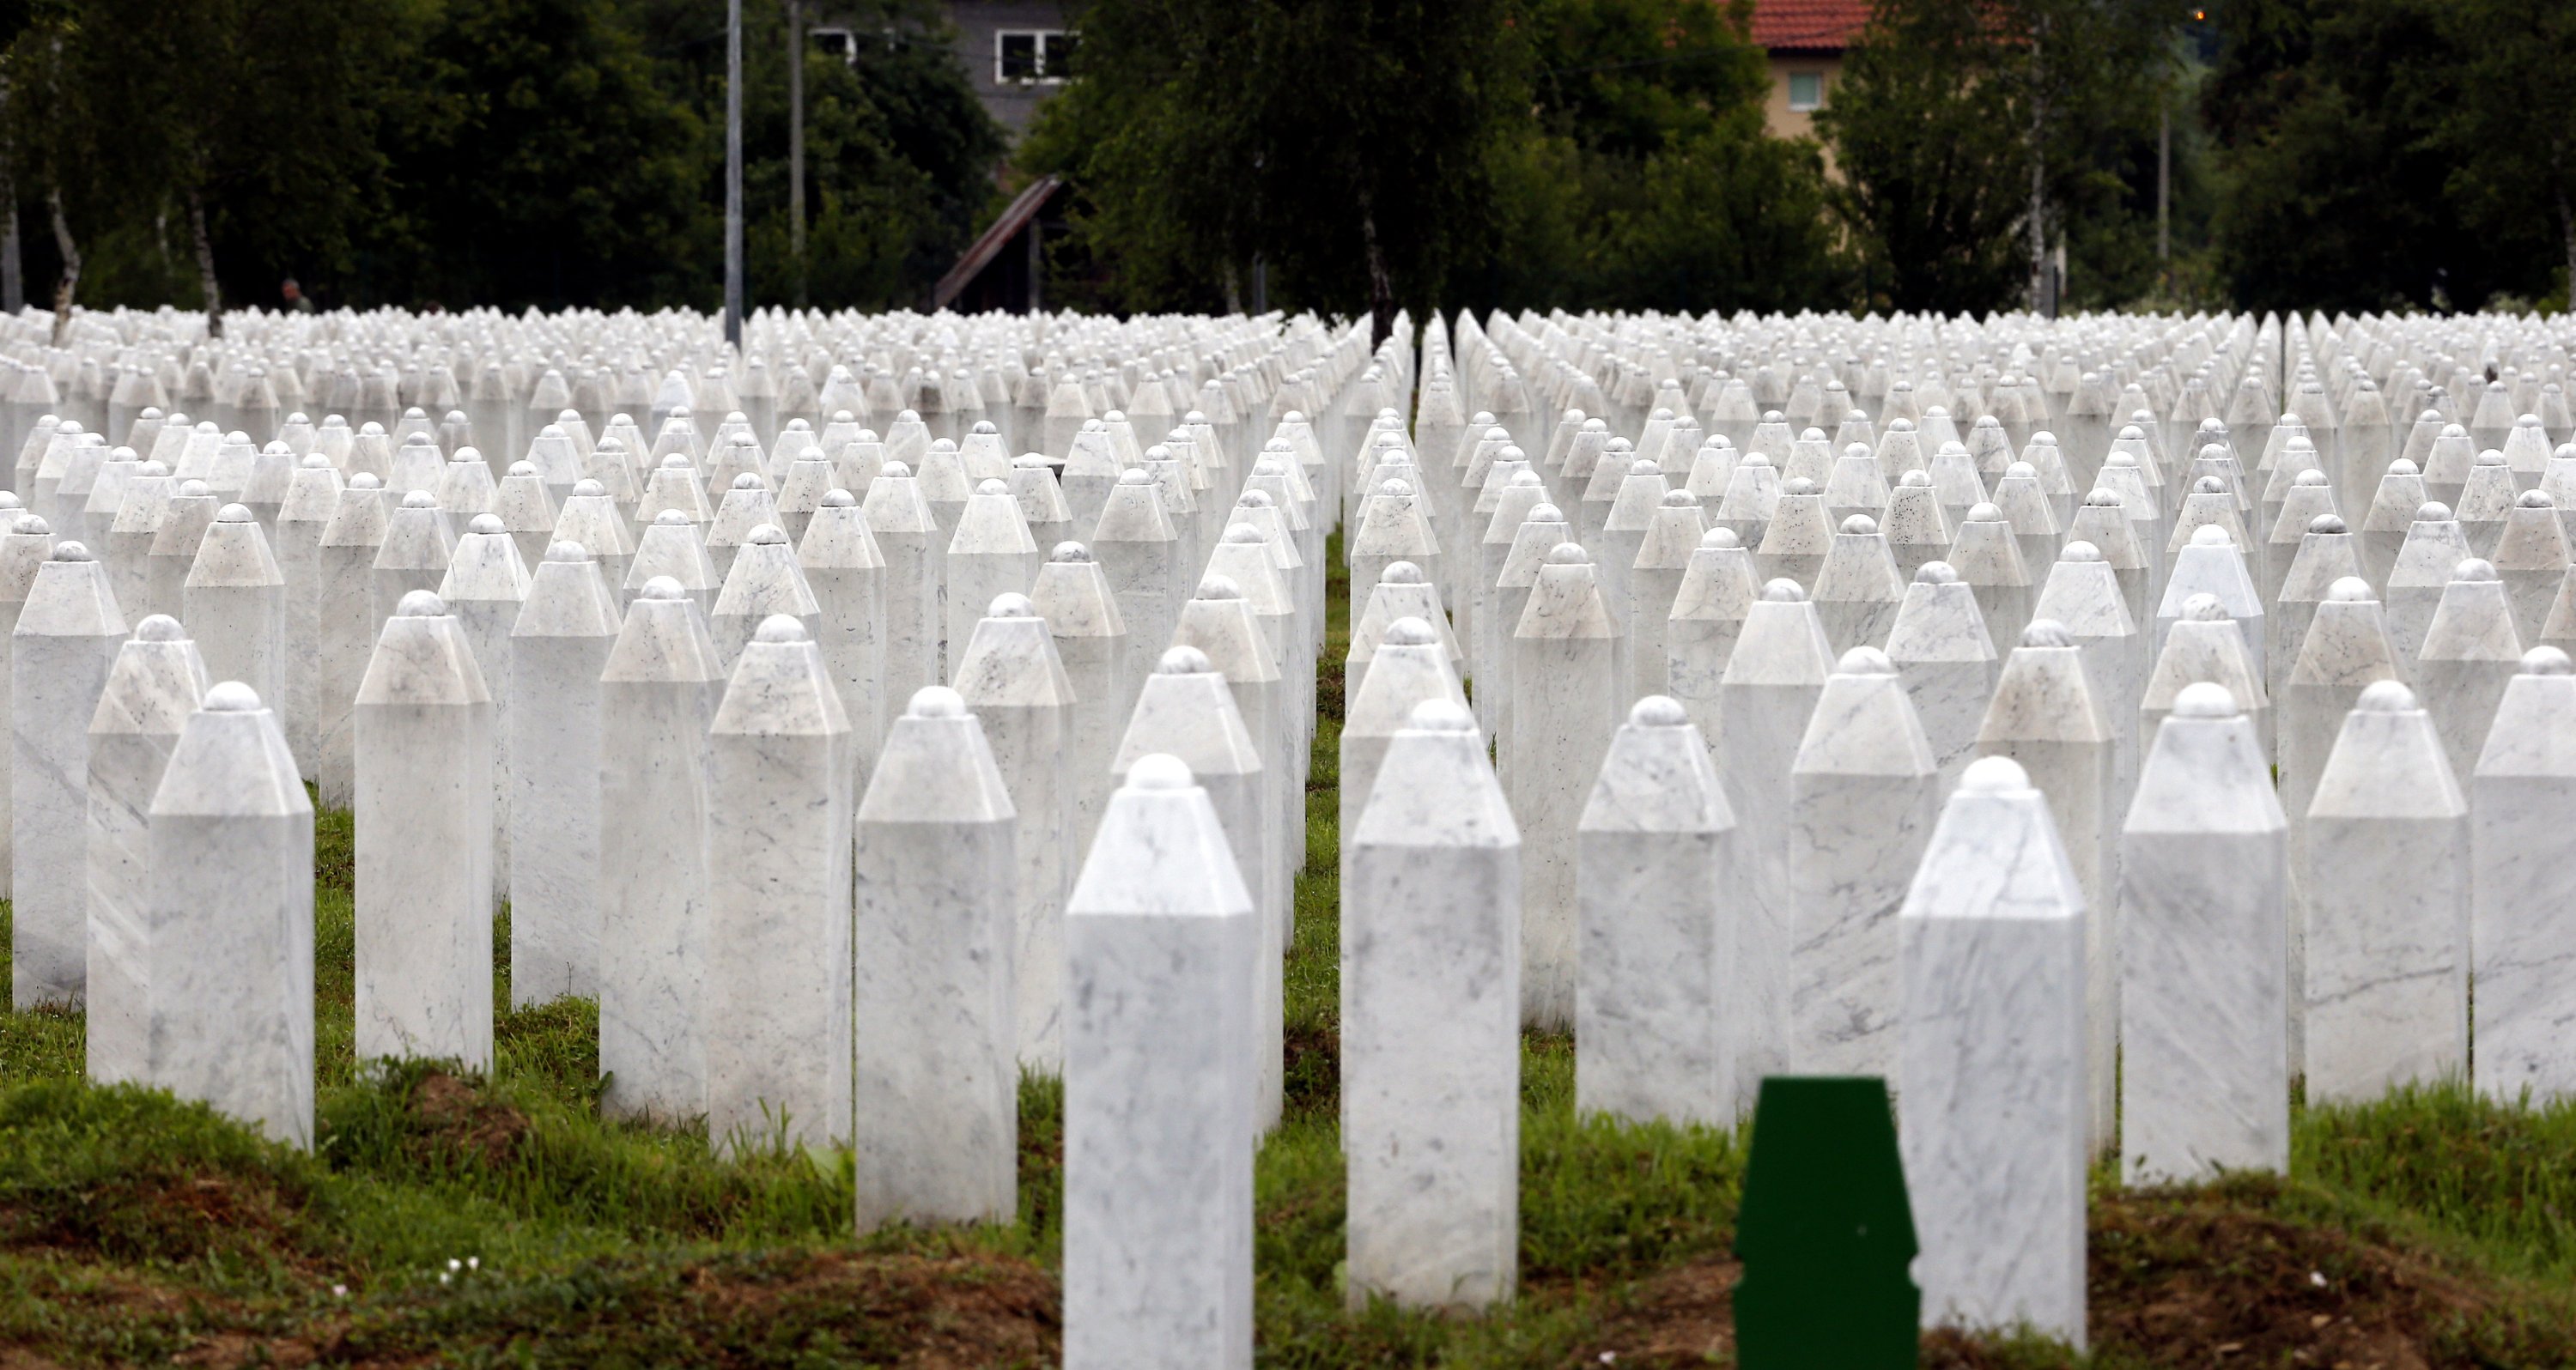 Bosnia S Autonomous Serb Govt Indoctrinating Children With Srebrenica Genocide Denial Un Daily Sabah